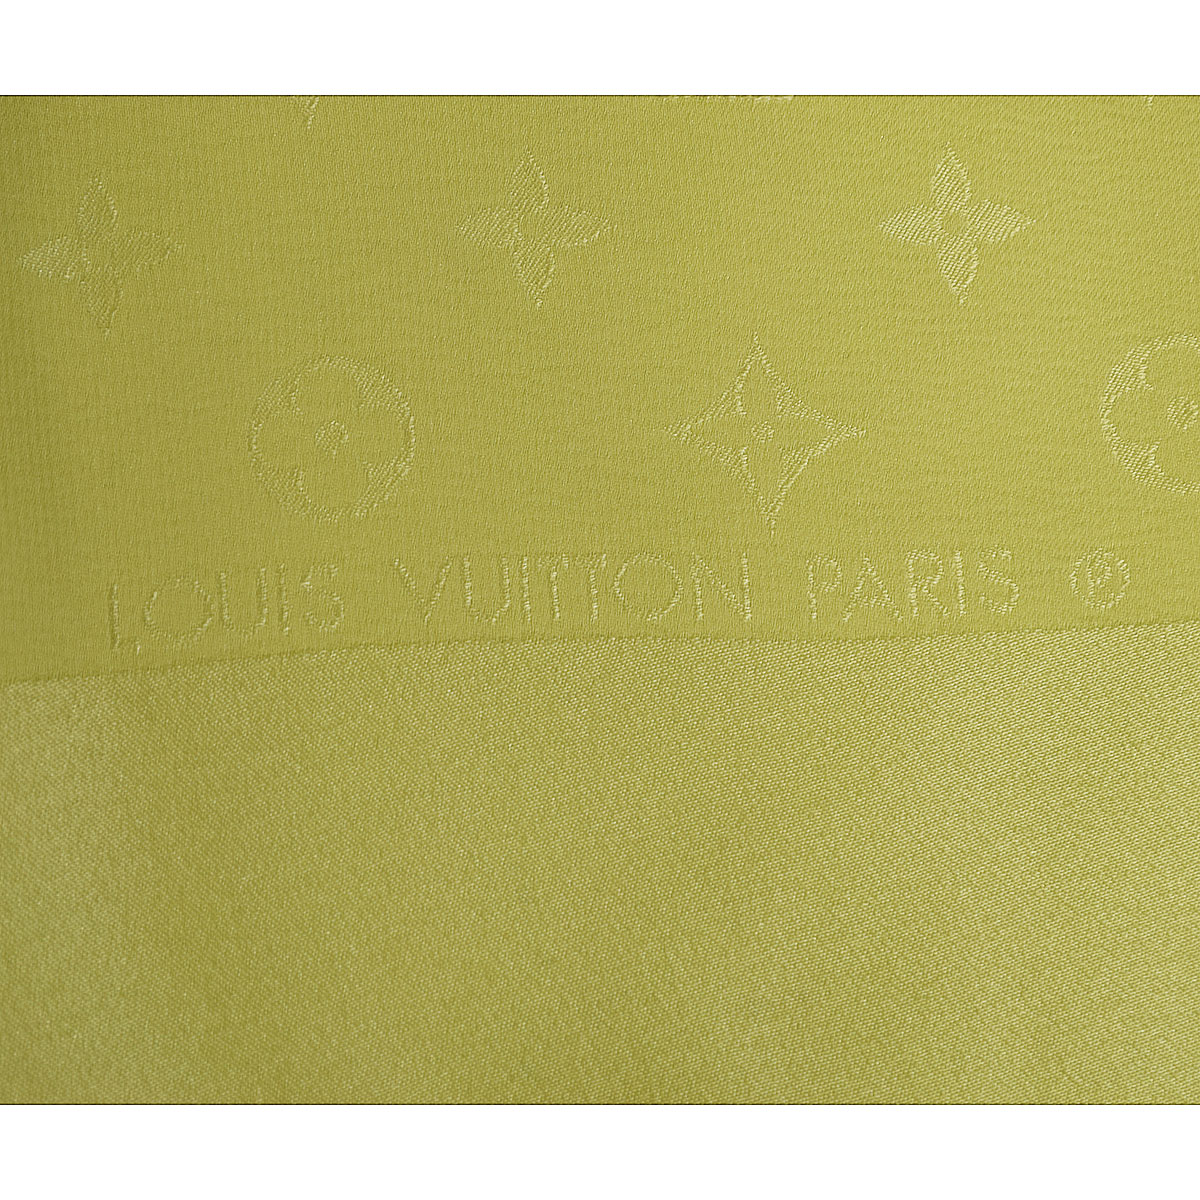 LOUIS VUITTON ルイ・ヴィトン カレ モナコ 90 グリーン シルク100% Made In Italy【送料無料】緑系 レディース スカーフ【中古】31610811 3